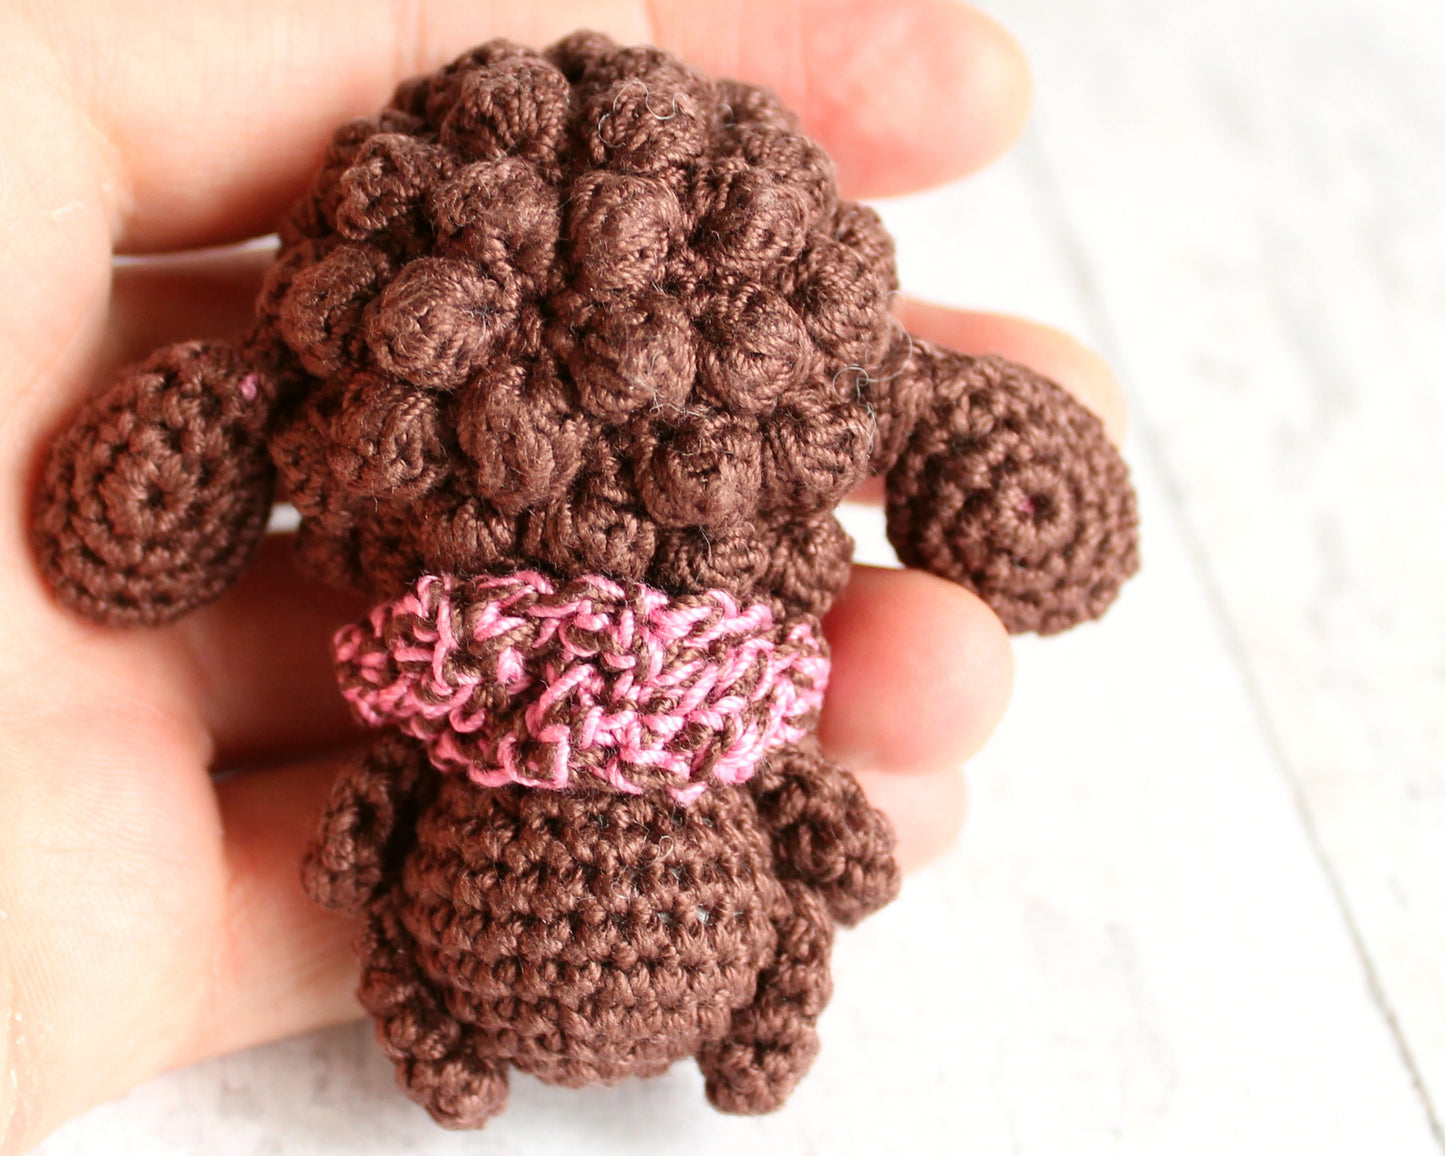 Pattern Crochet Little Sheep, Crochet Amigurumi, Handmade Gift, Crochet Accessory, Crochet Animal, Bag Charm Sheep, PDF Crochet Toy Pattern